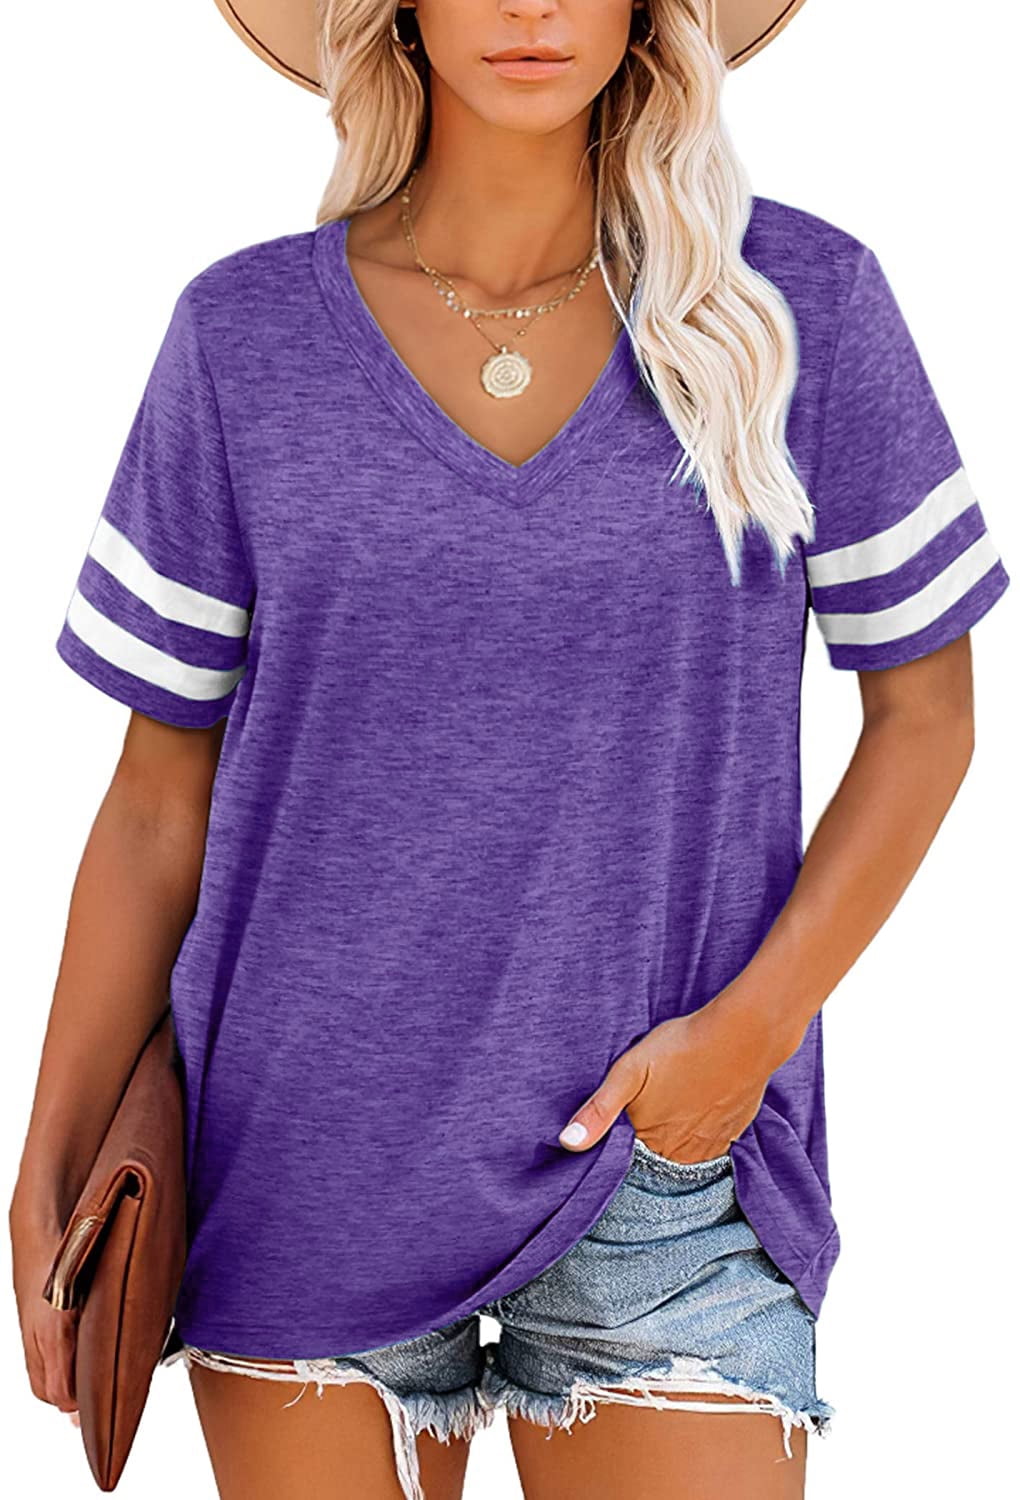 Summer Sleeve for Tunic Casual Tops Neck Tops Women V Basic T ONLYSHE Shirts Shirts Short